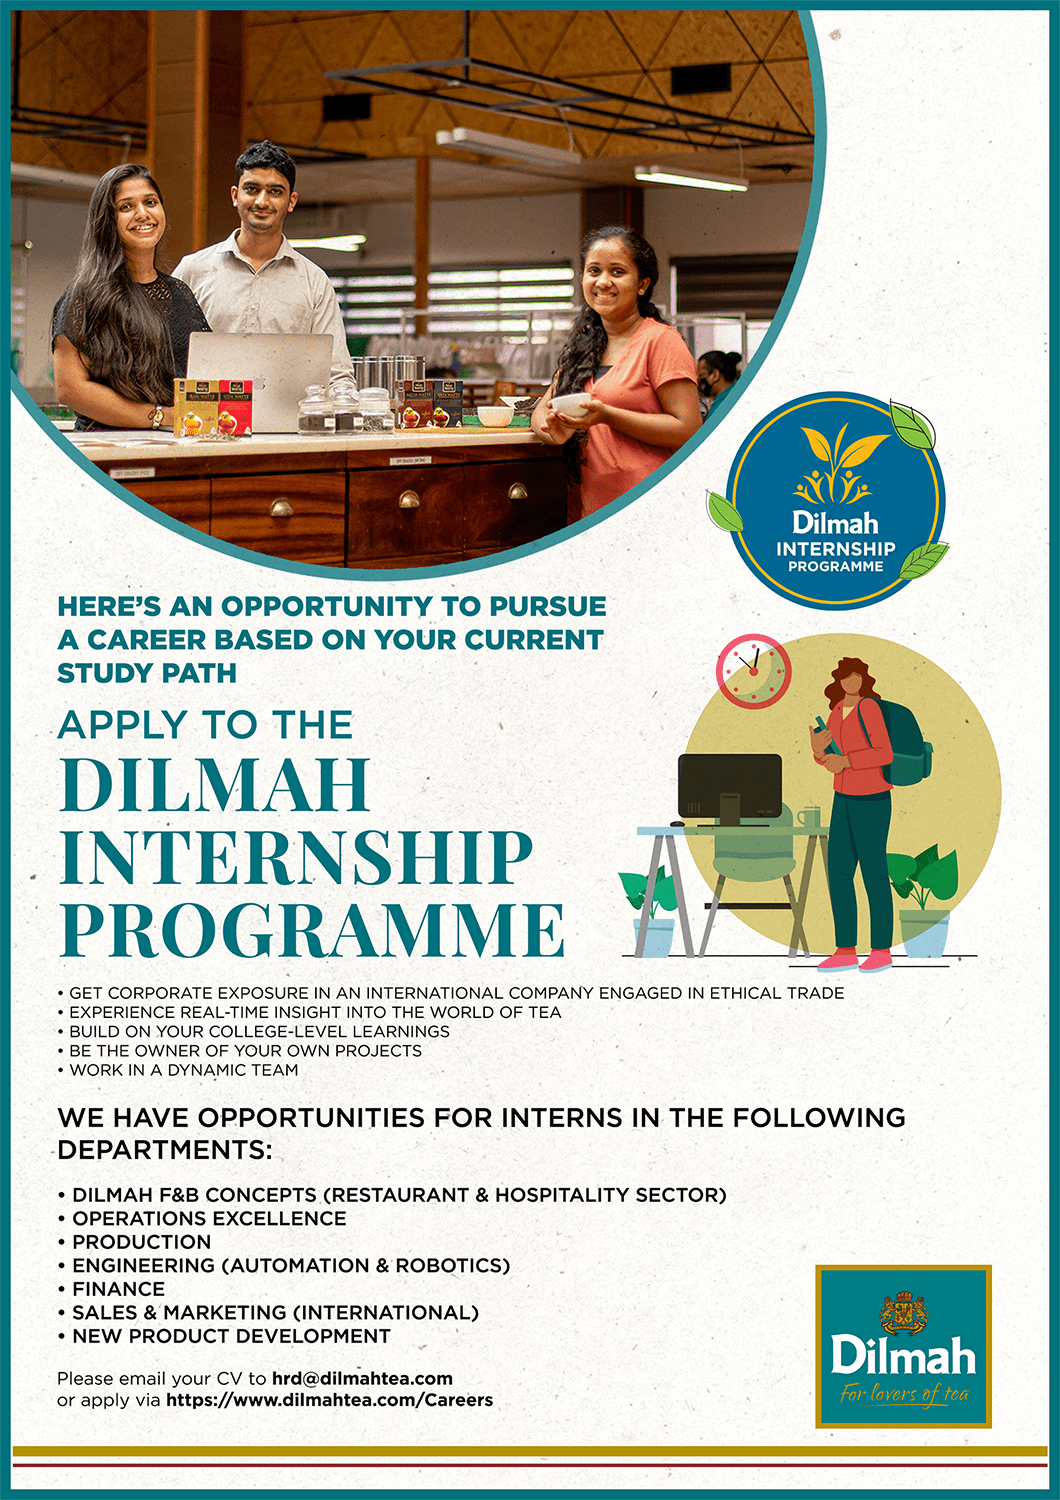 Internship (Operations Excellence) Vacancy - Dilmah Ceylon Tea Company Jobs Vacancies